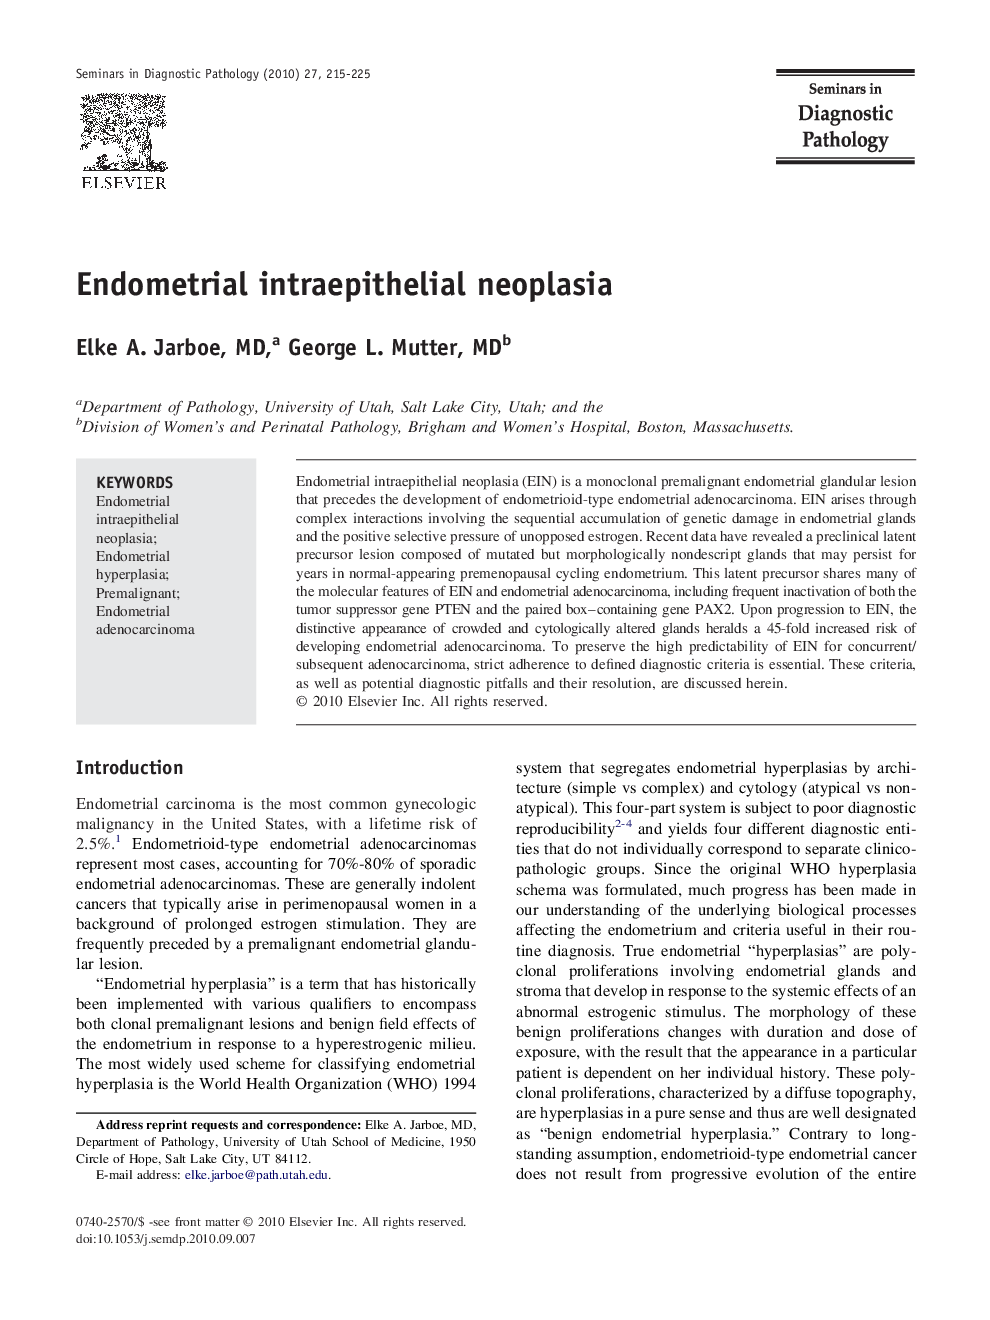 Endometrial intraepithelial neoplasia